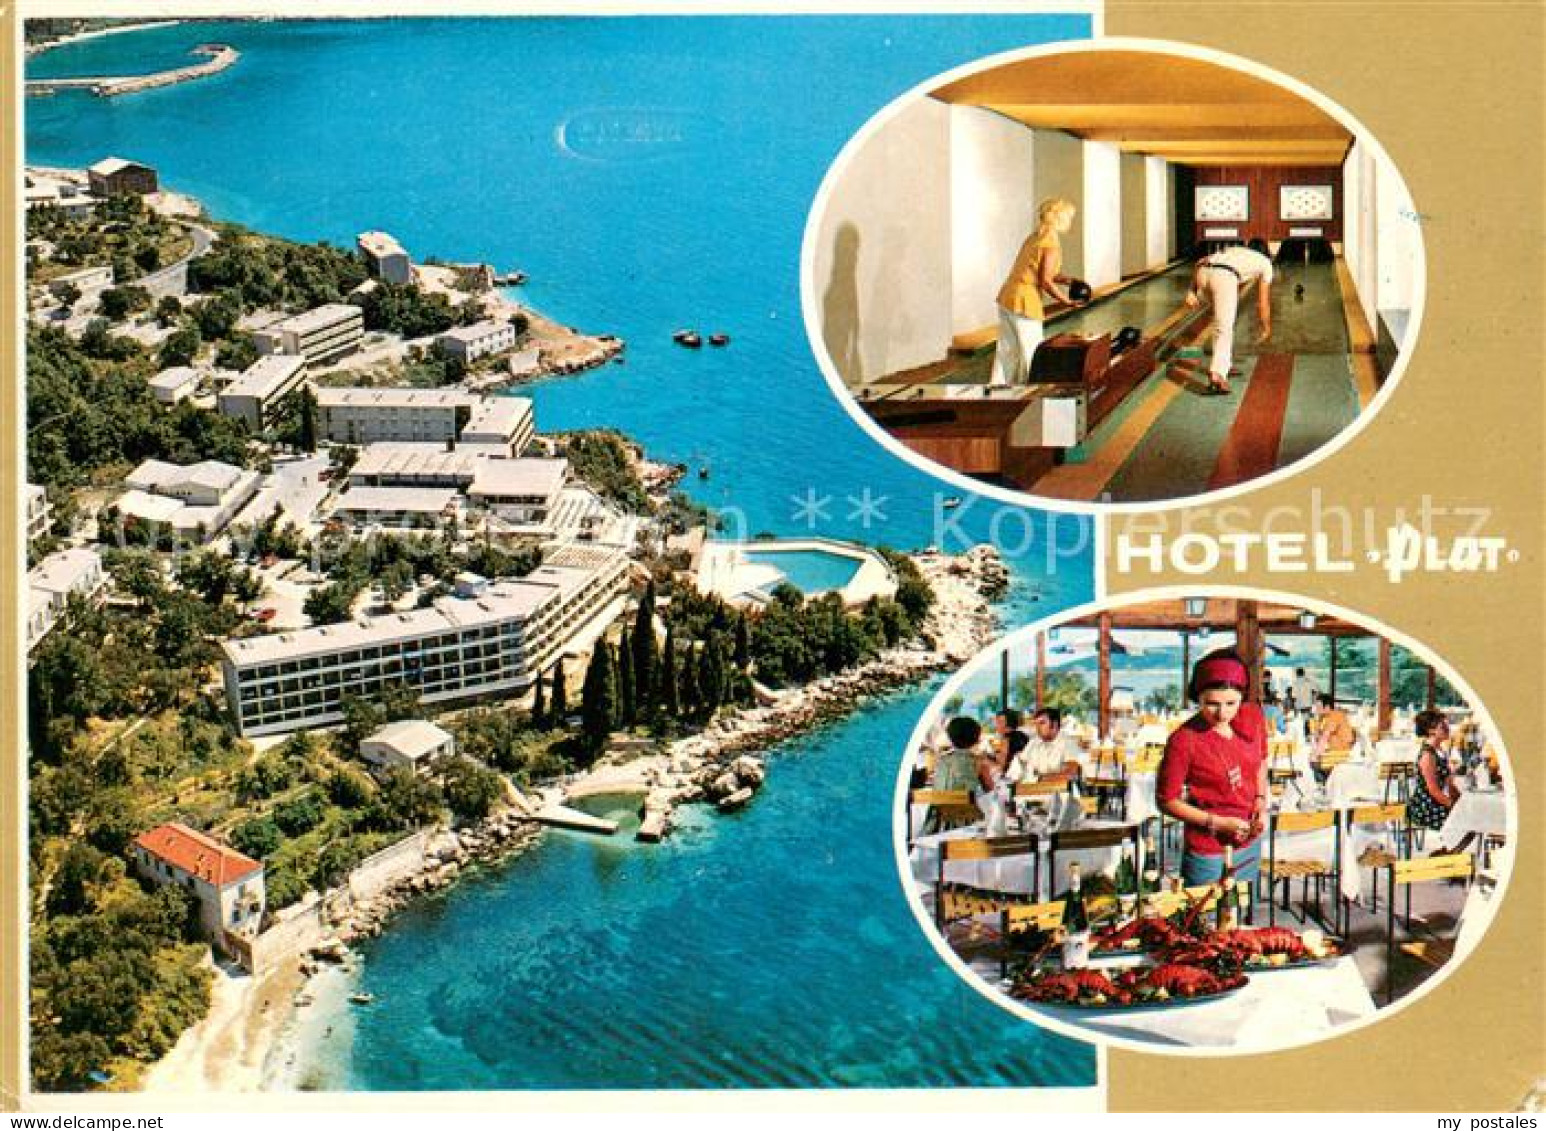 73648869 Dubrovnik Ragusa Hotel Plat Restaurant Kegelbahn Strand Kueste Fliegera - Croatia